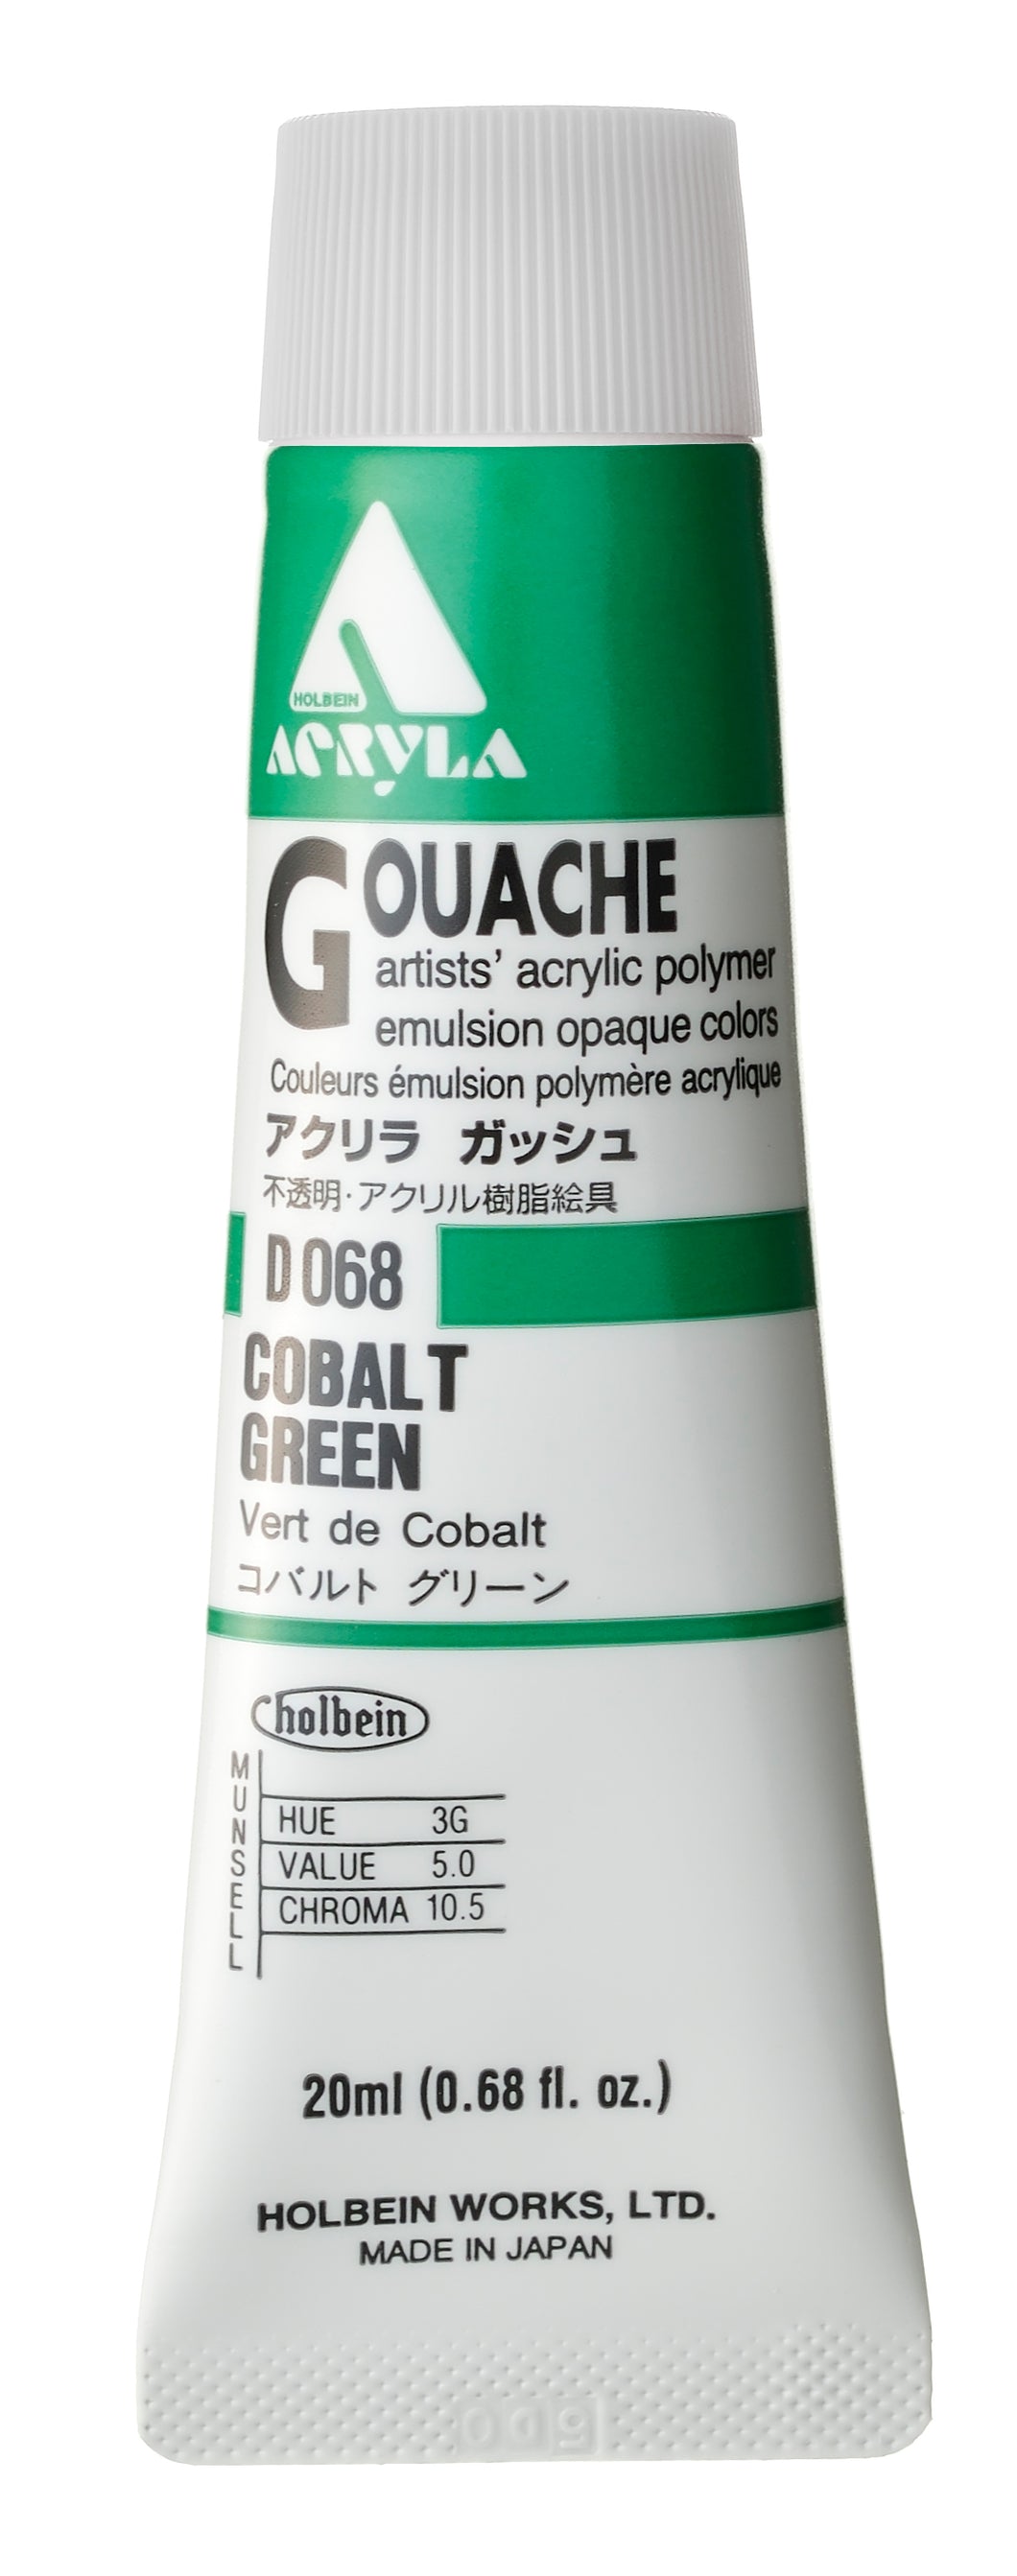 Holbein Acryla Gouache- Cobalt Green (D068)